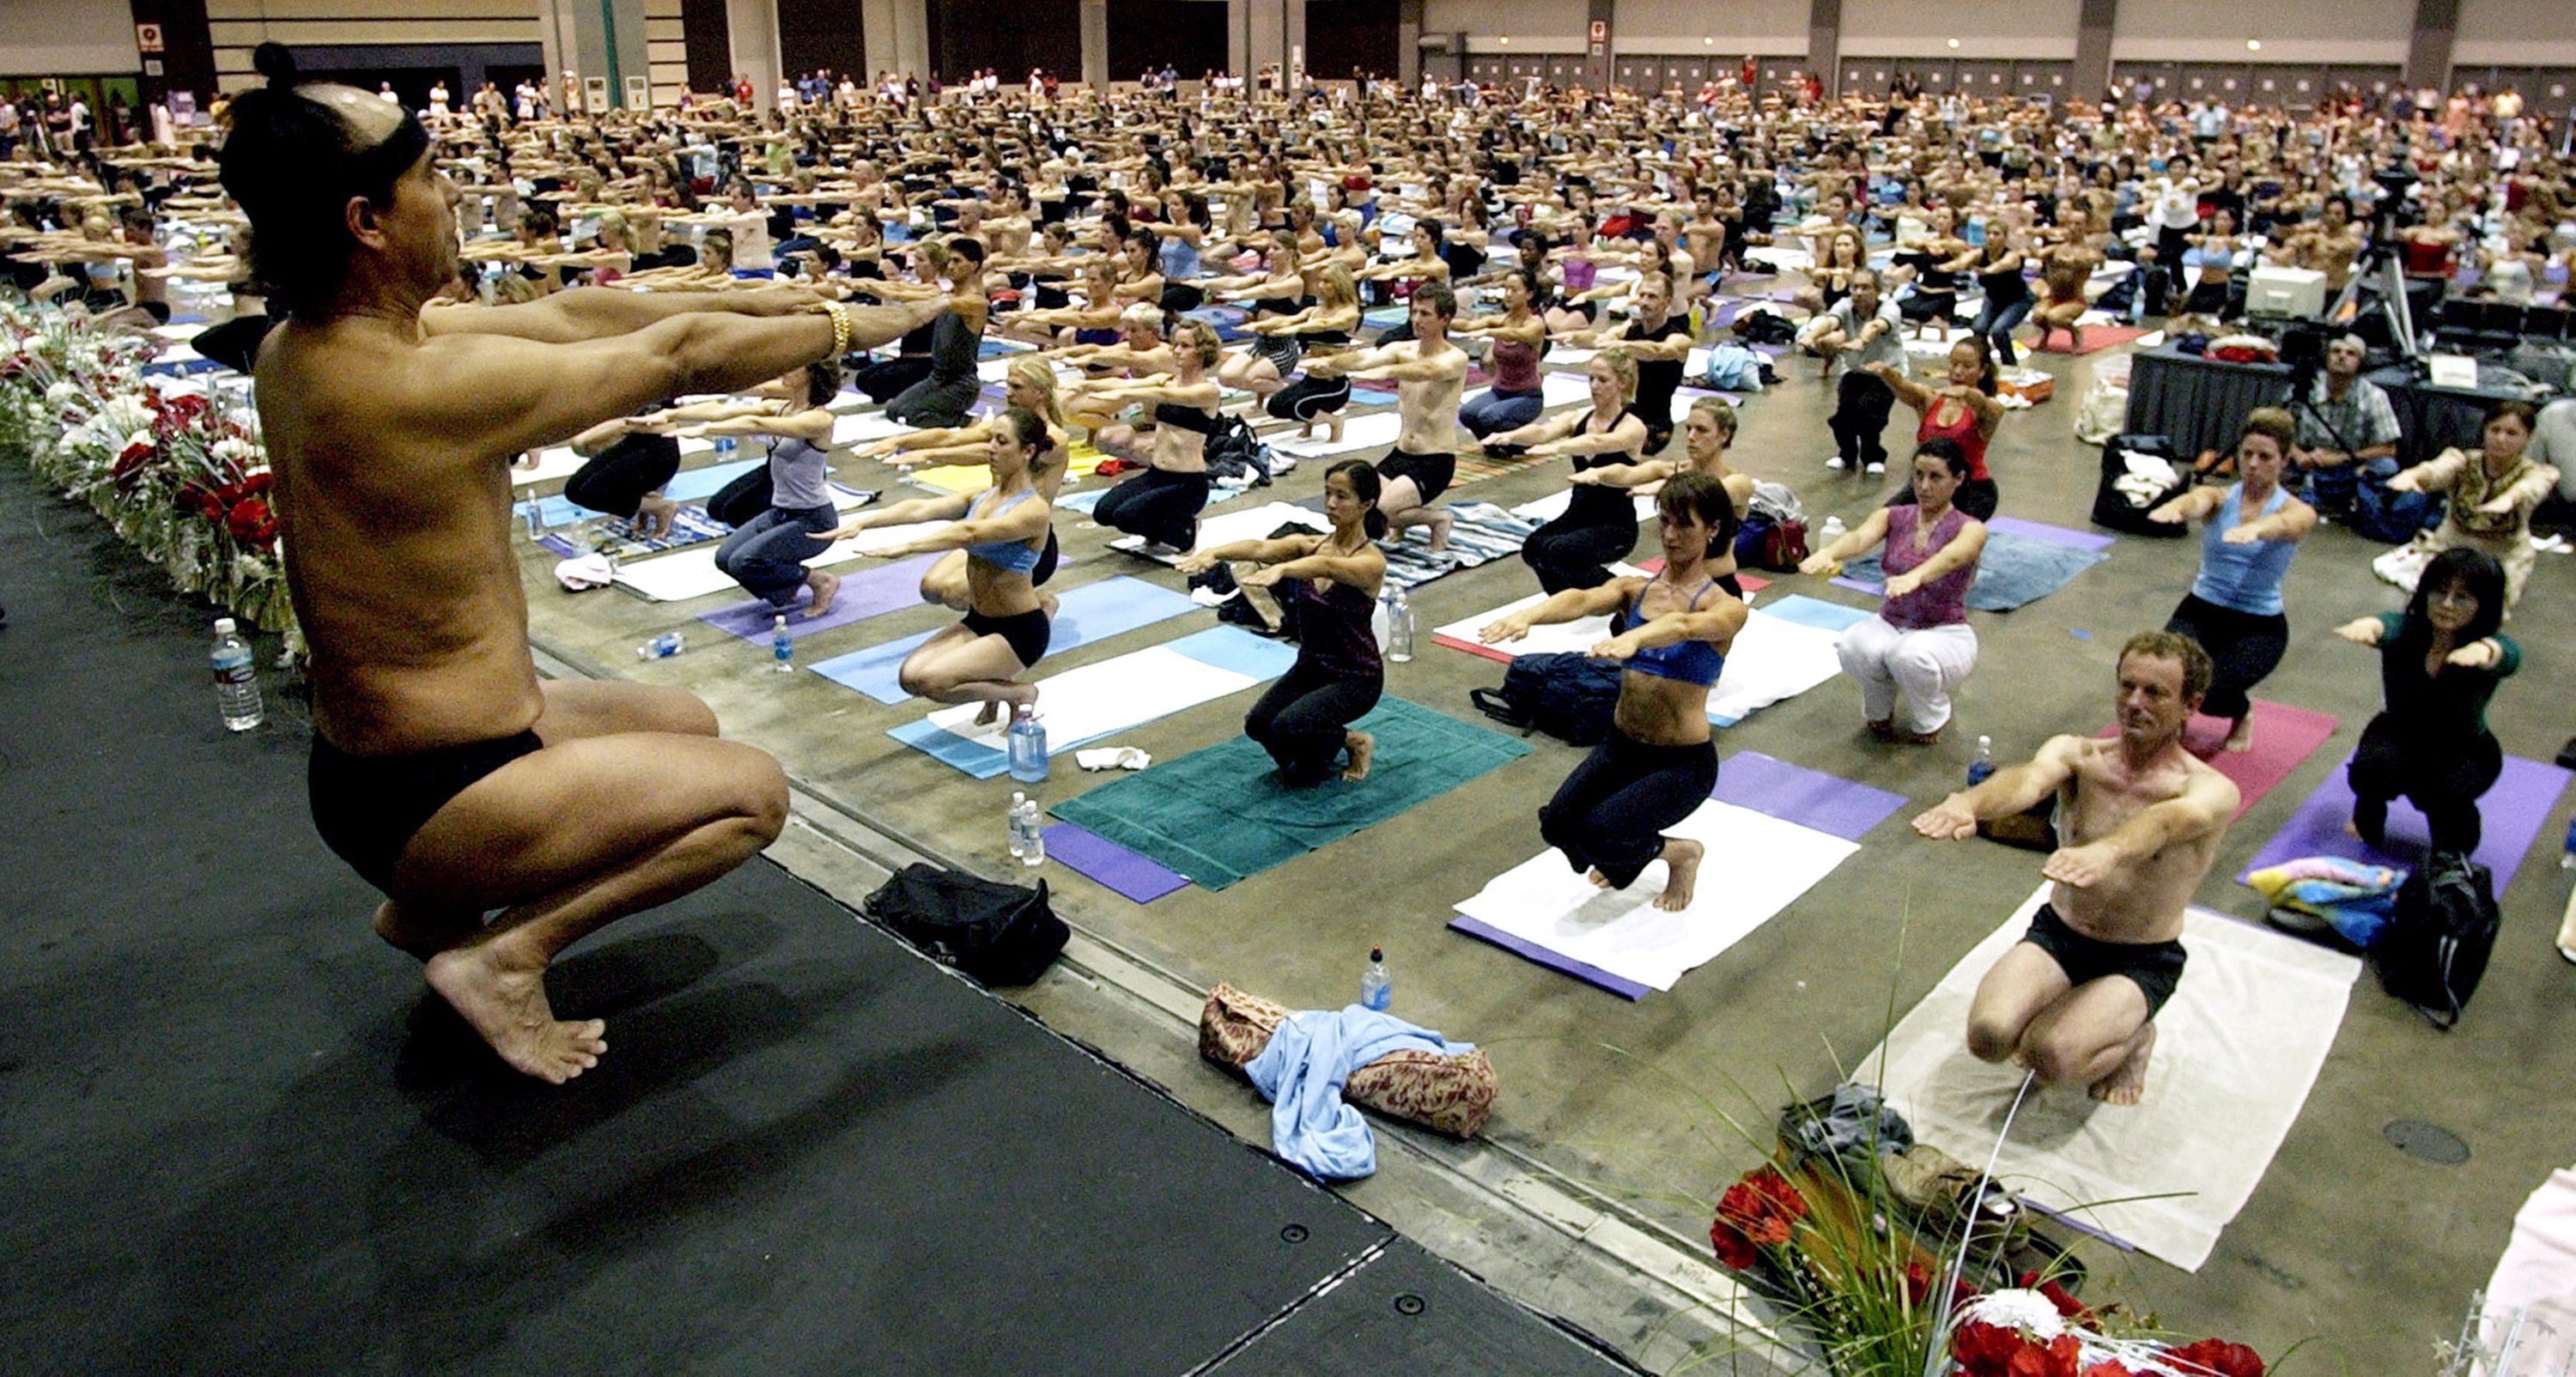 Bikram Yoga Acquired by KPC Group - Athletech News